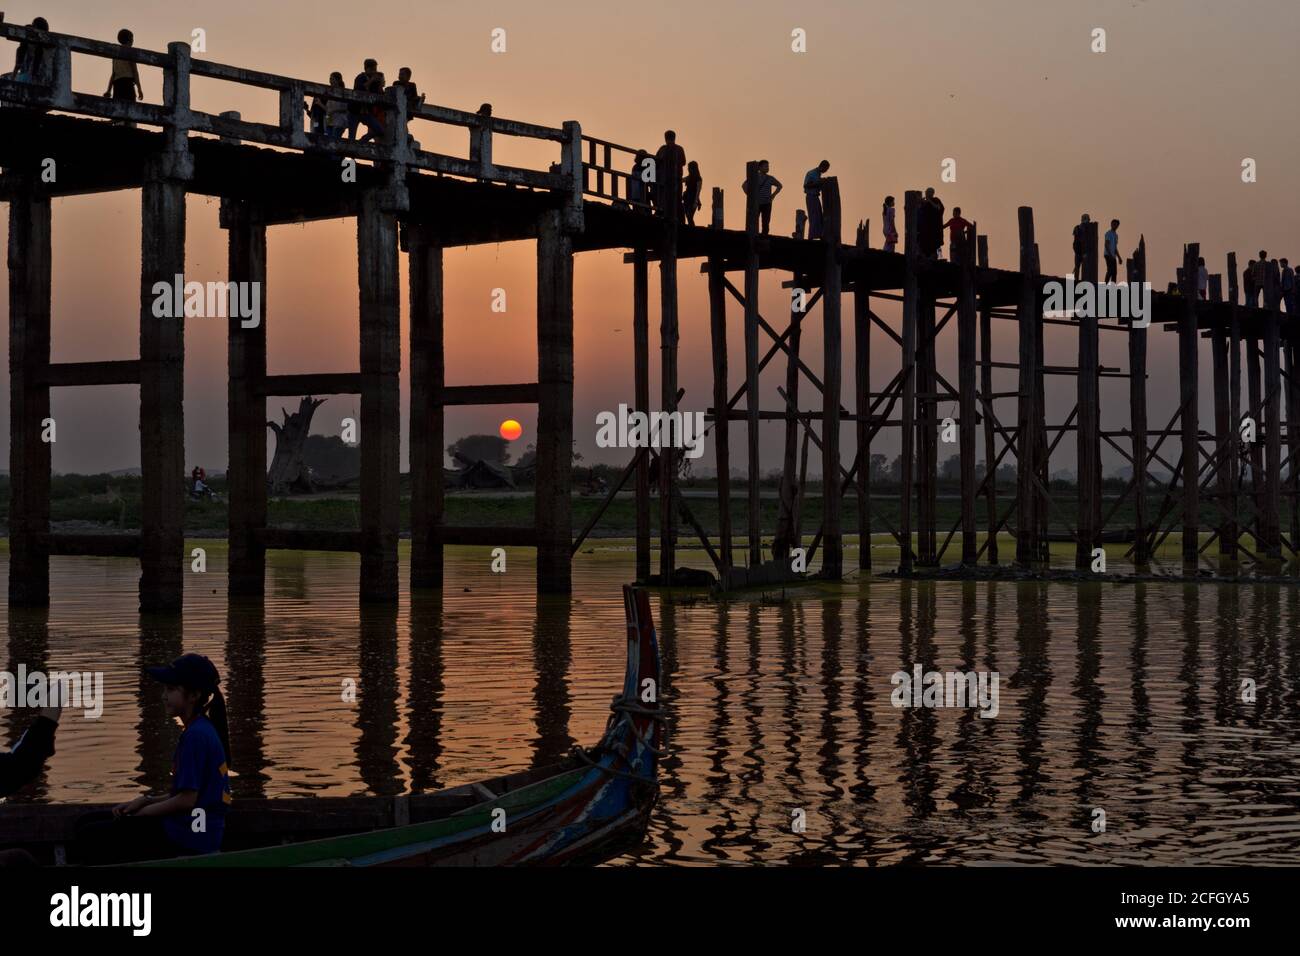 U Bein Bridge with people and sunset reflection, Amarapura, Mandalay, Myanmar, Asia Stock Photo